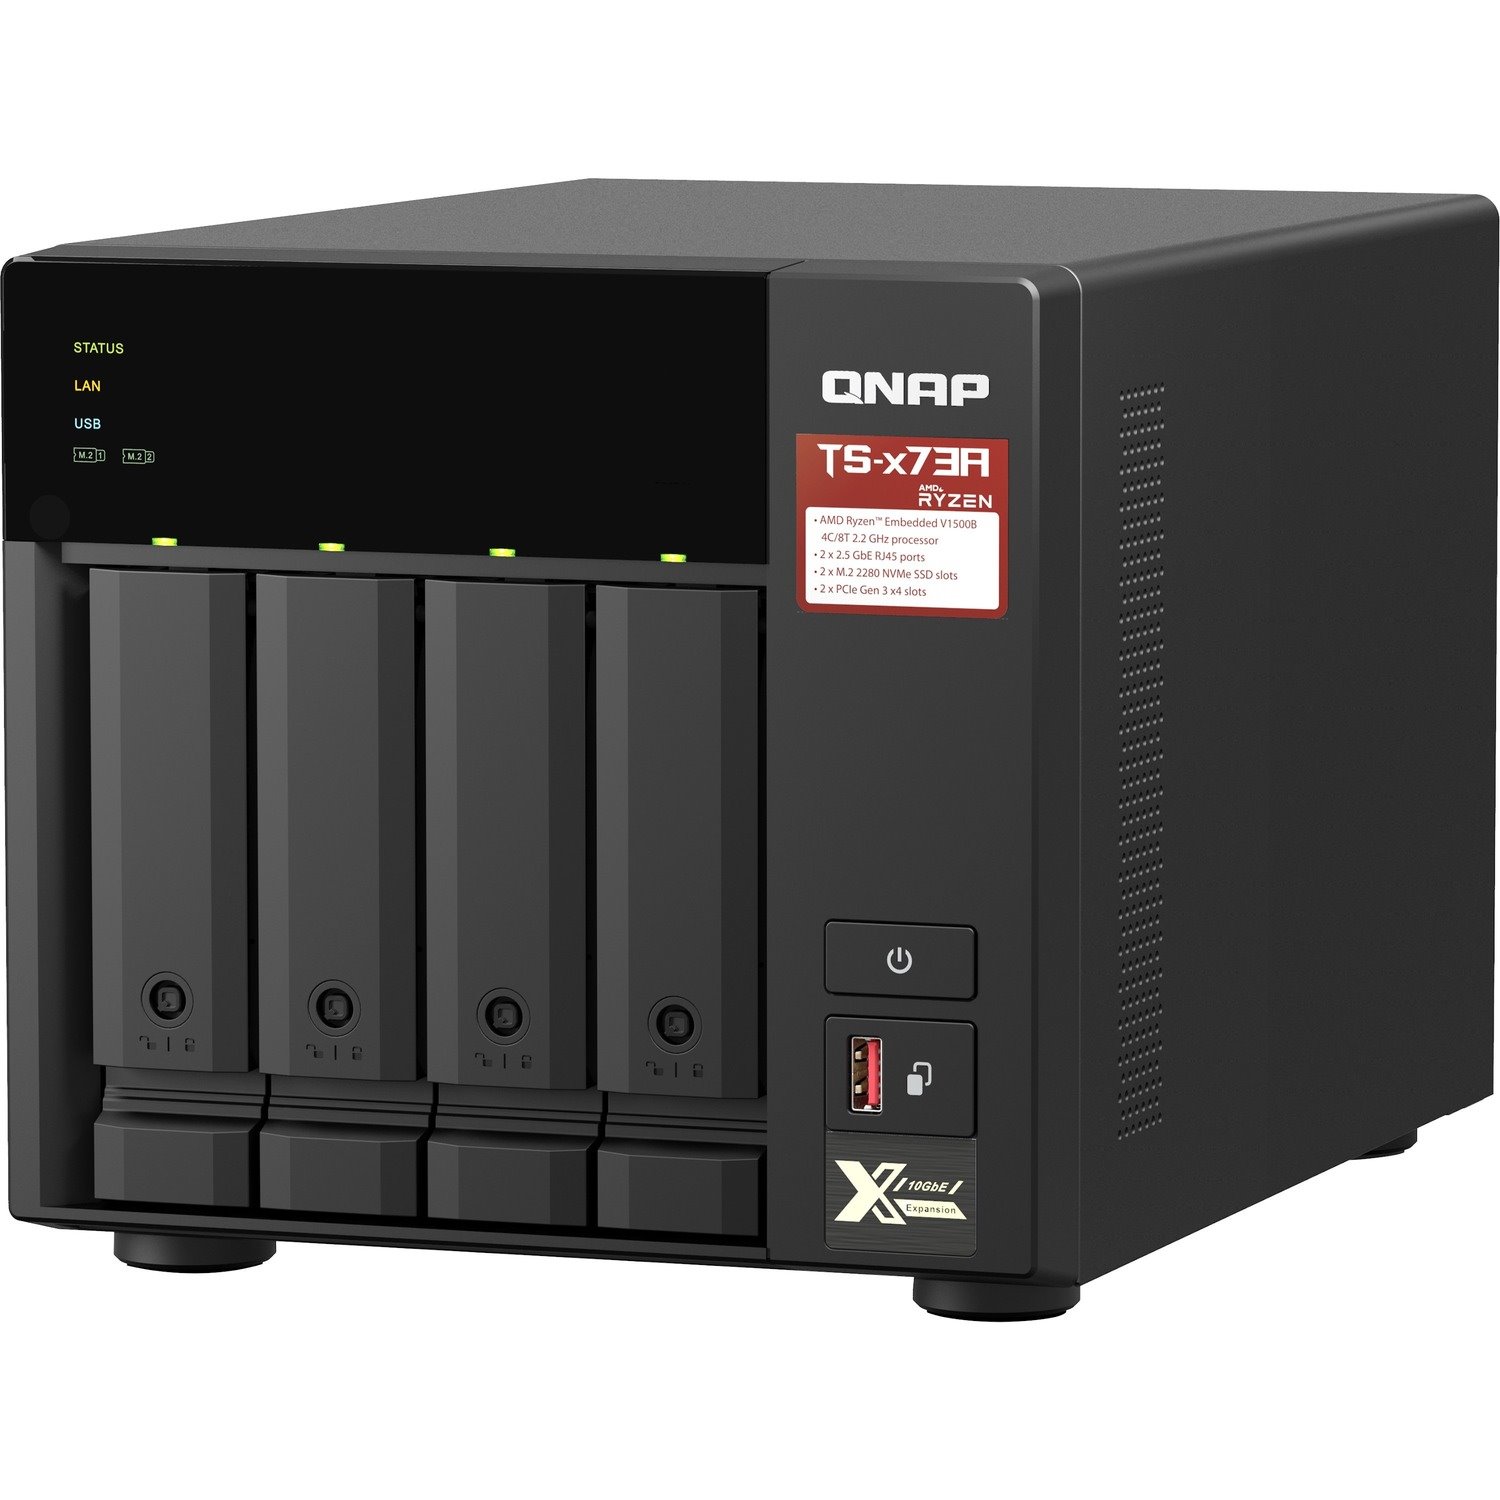 QNAP TS-473A-8G SAN/NAS Storage System